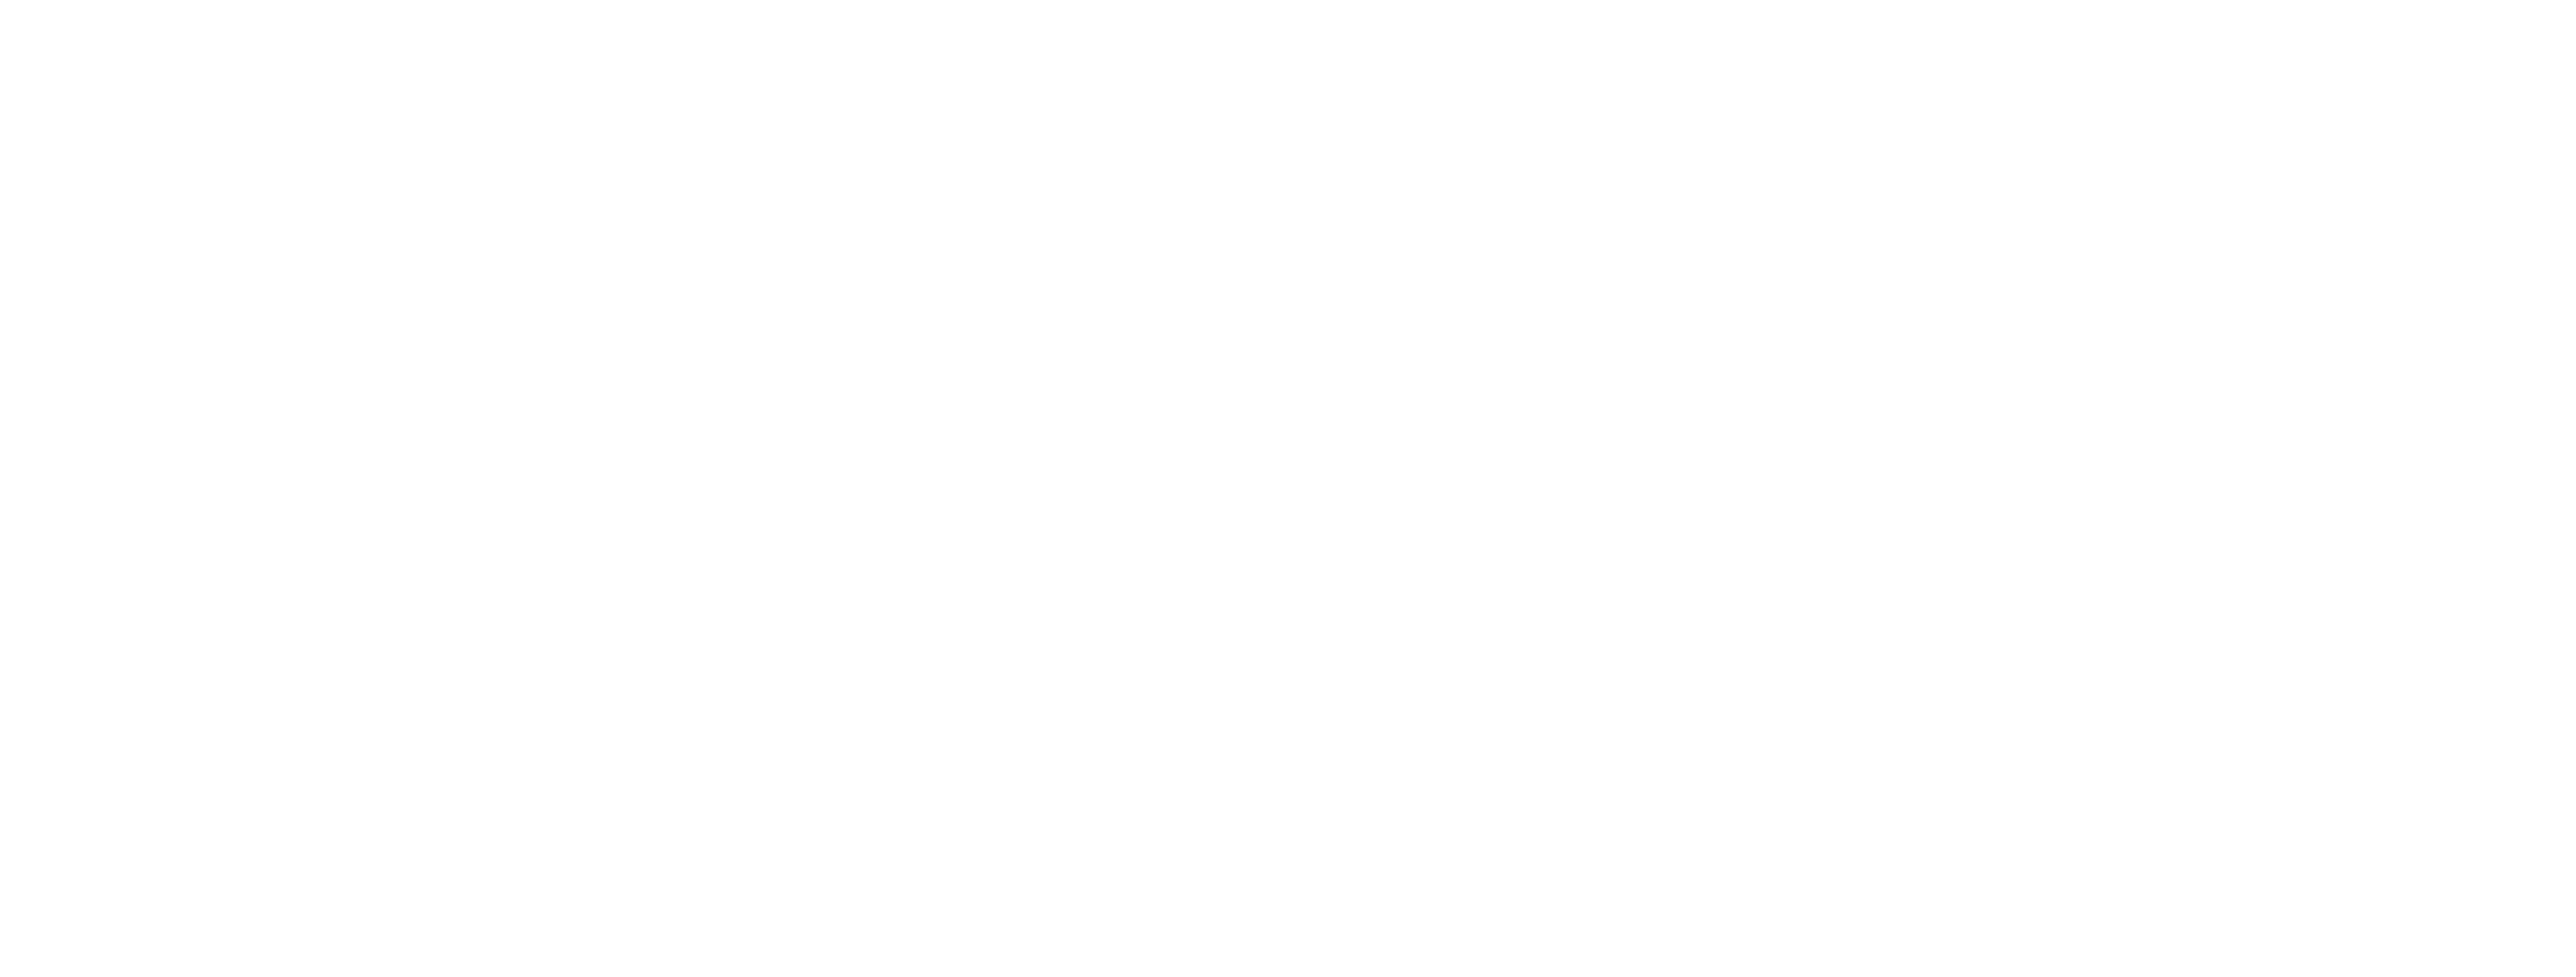 live volleyball vnl 2022